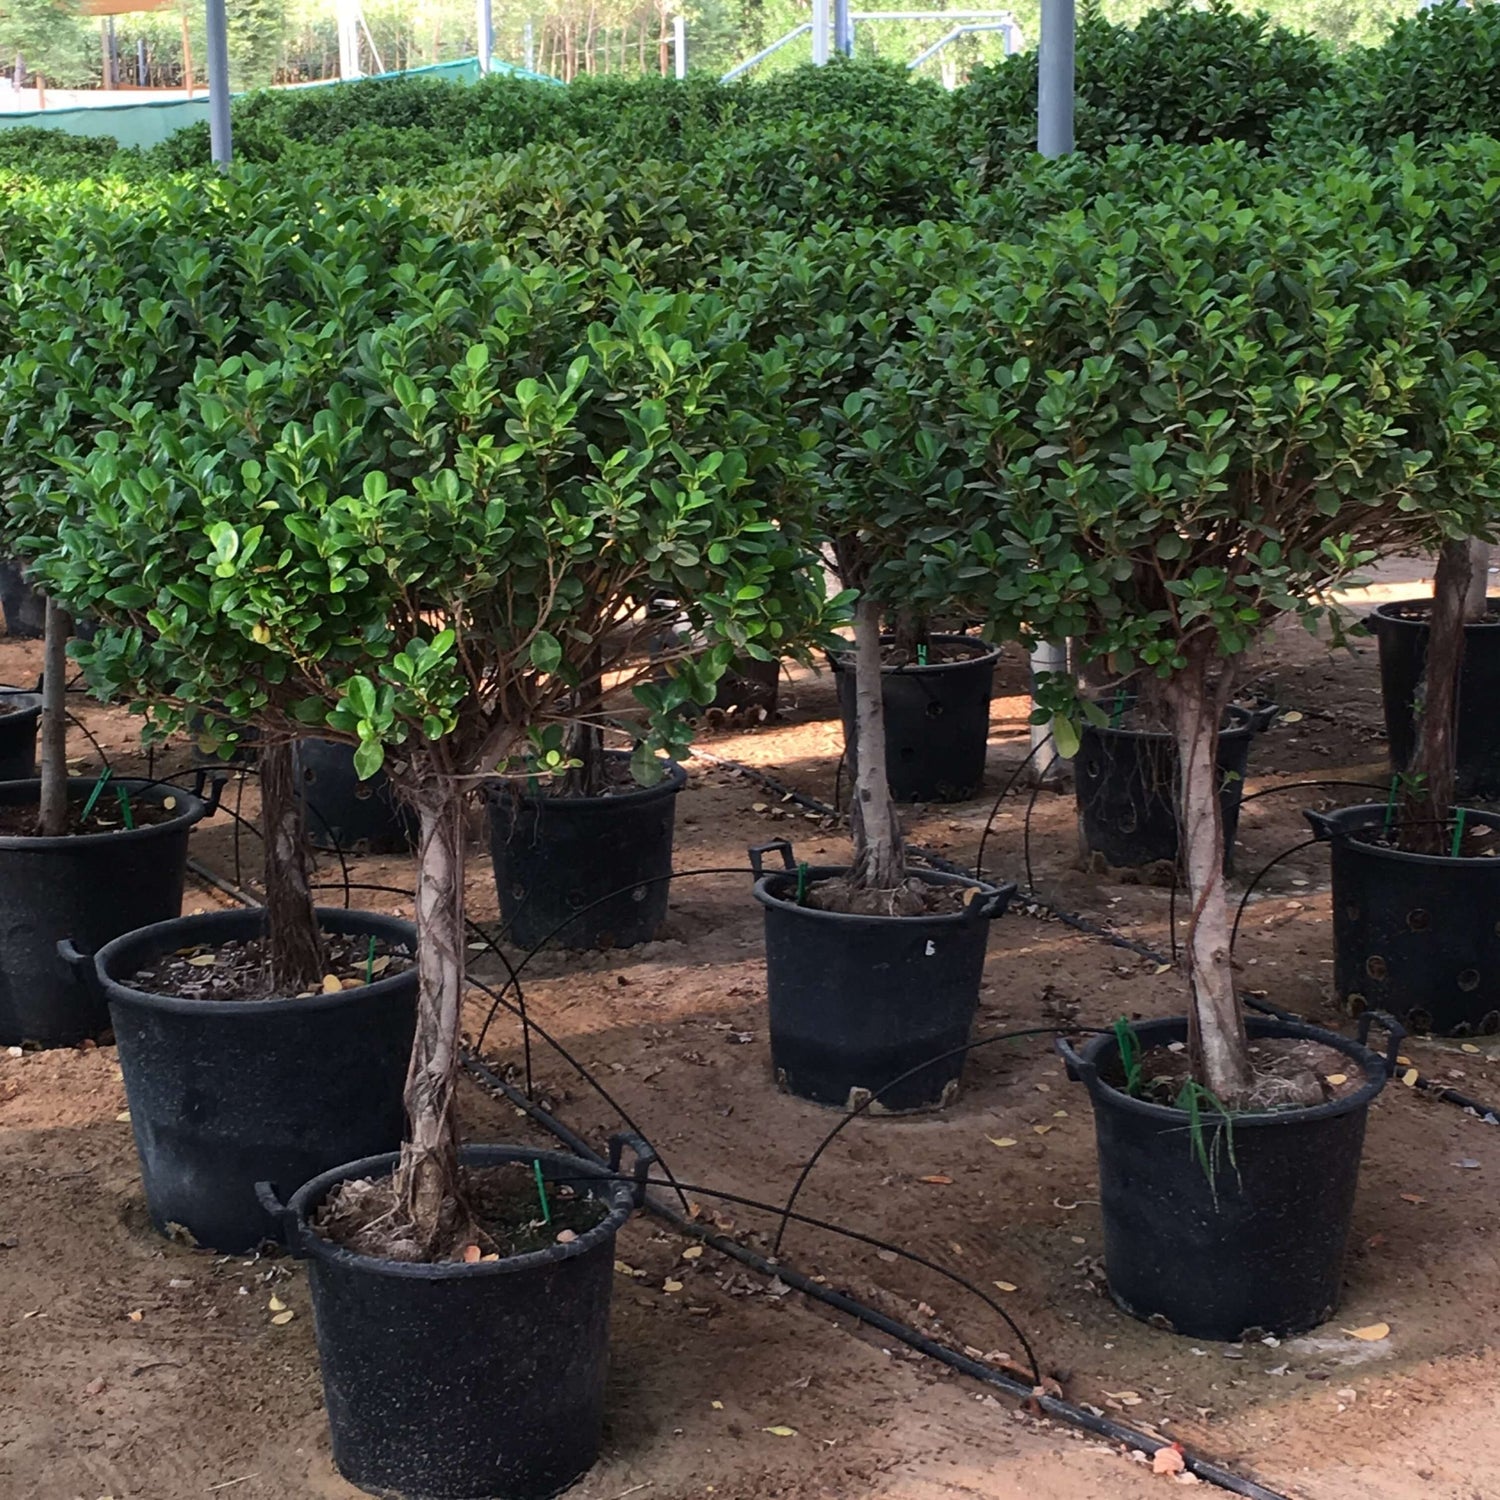 Ficus diversifolia “Single head”